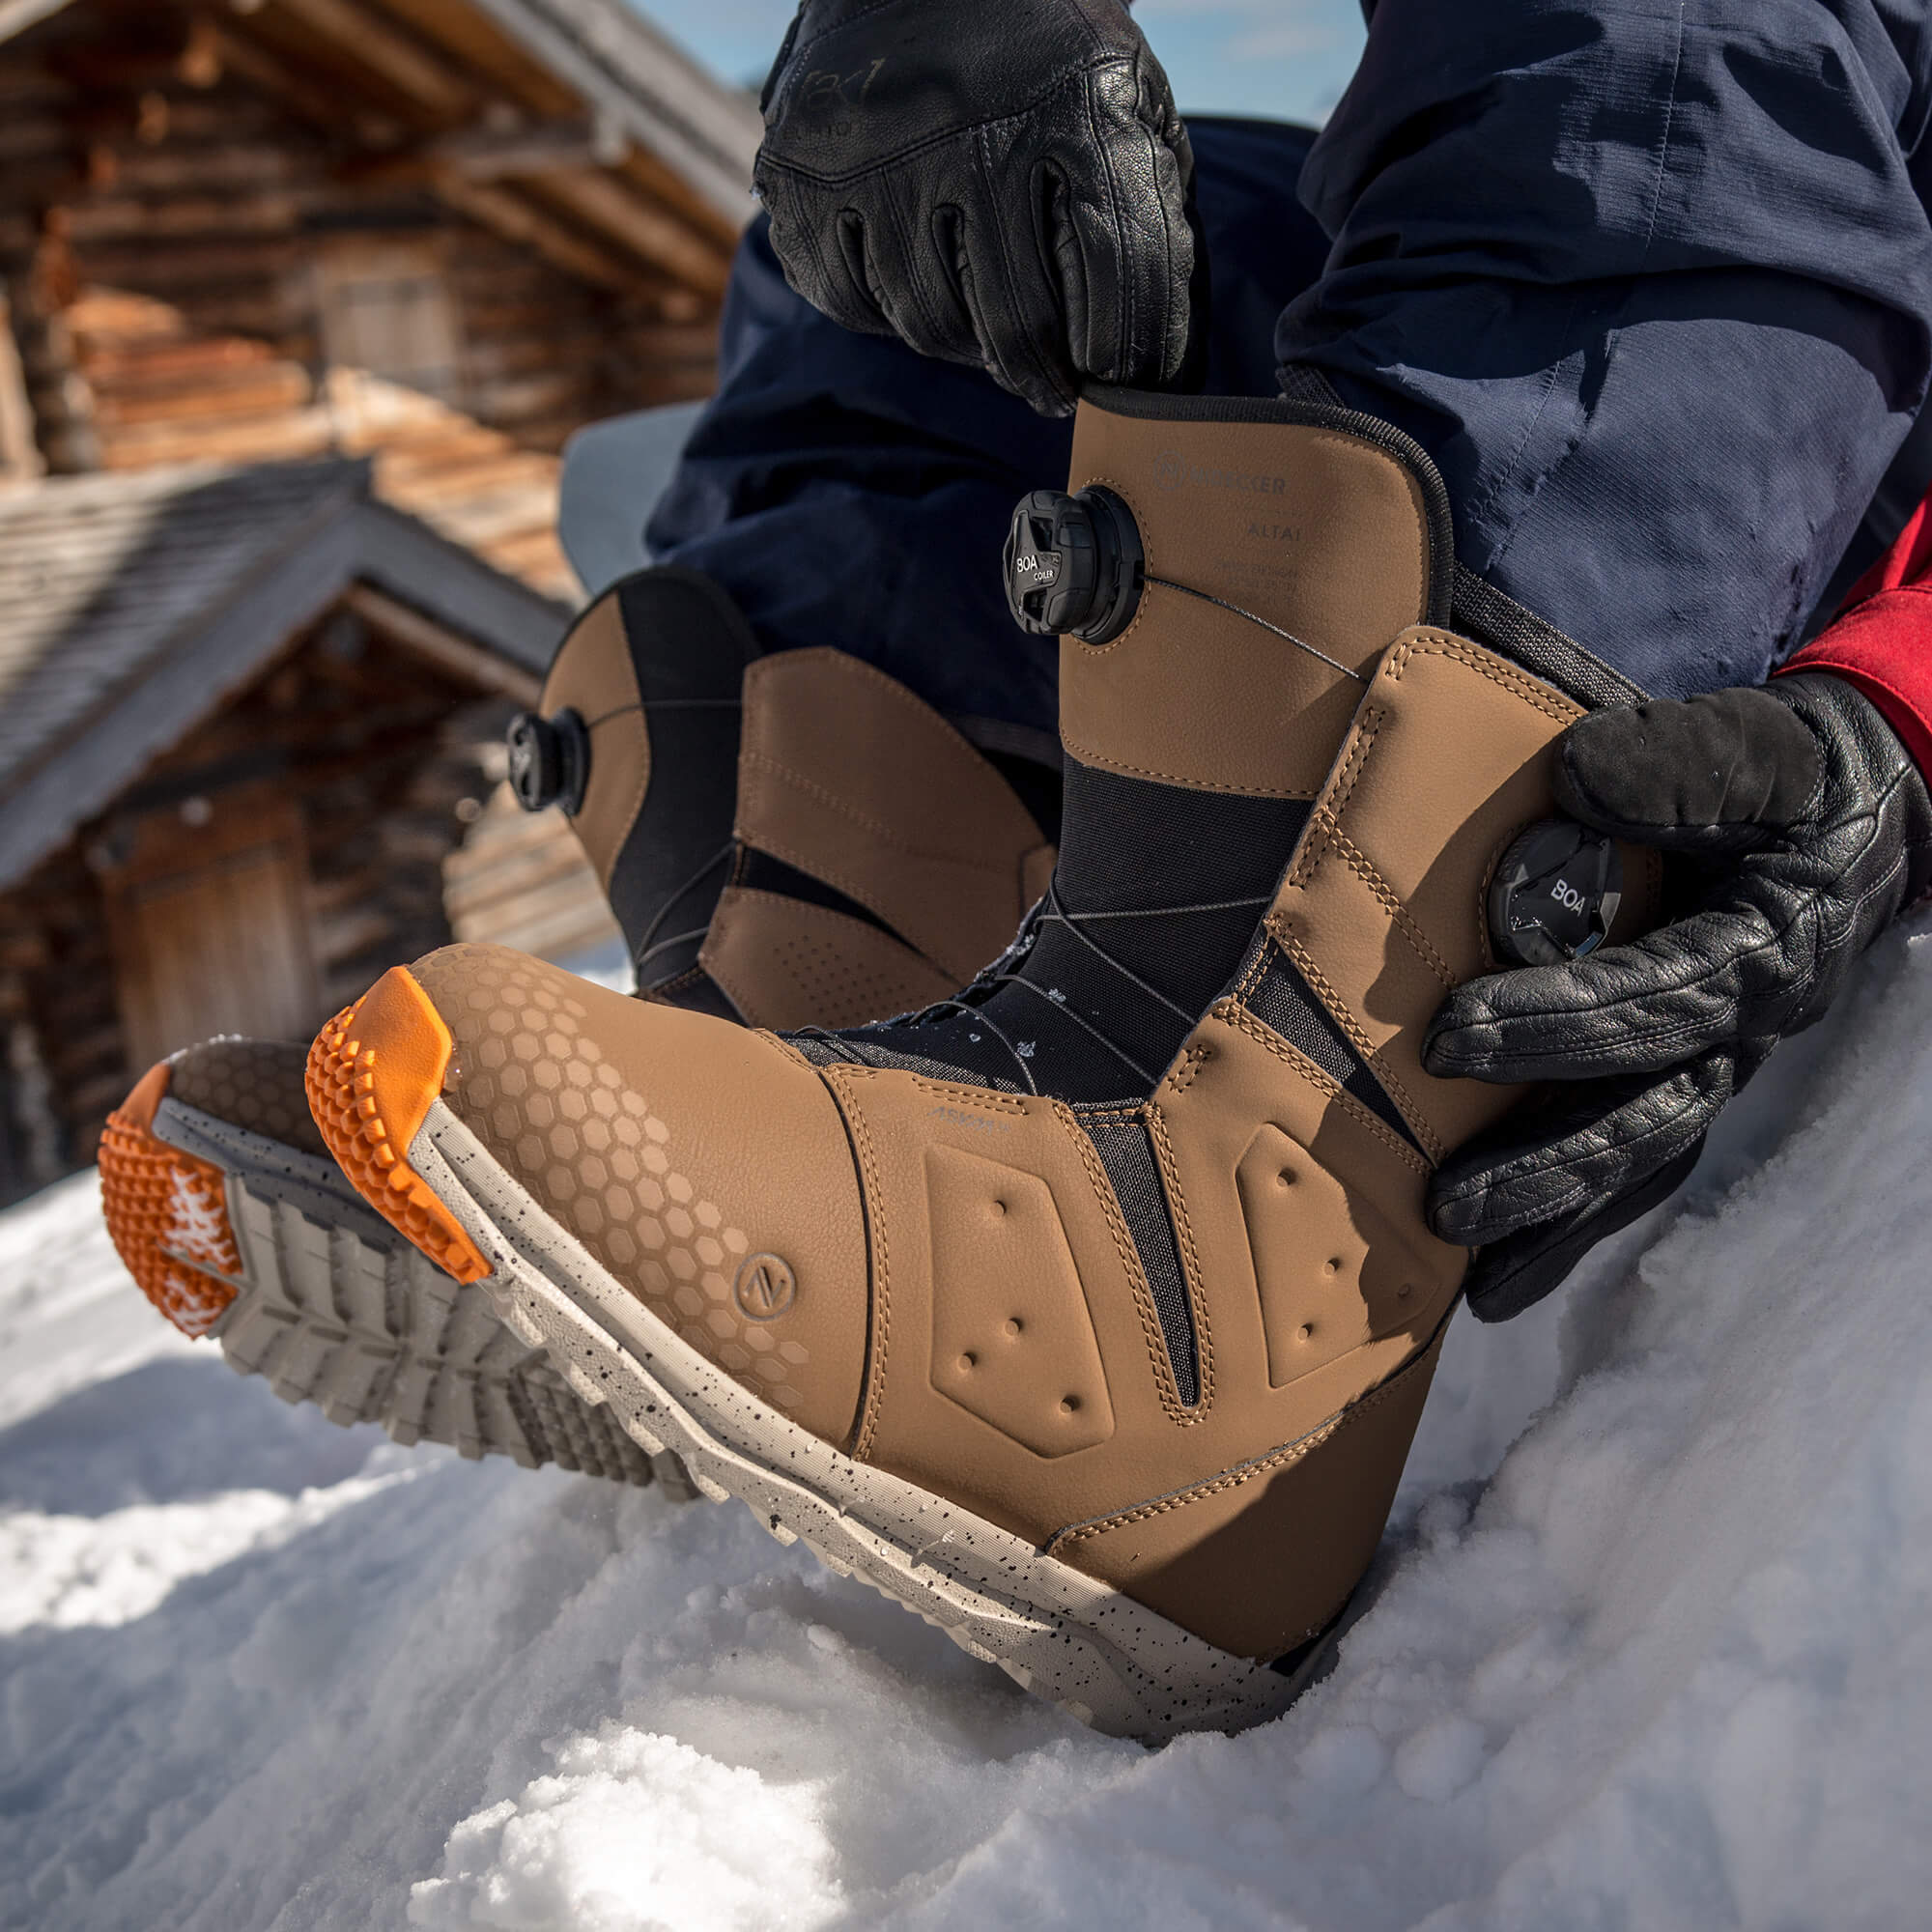 Nidecker Altai Men's Snowboard Boots